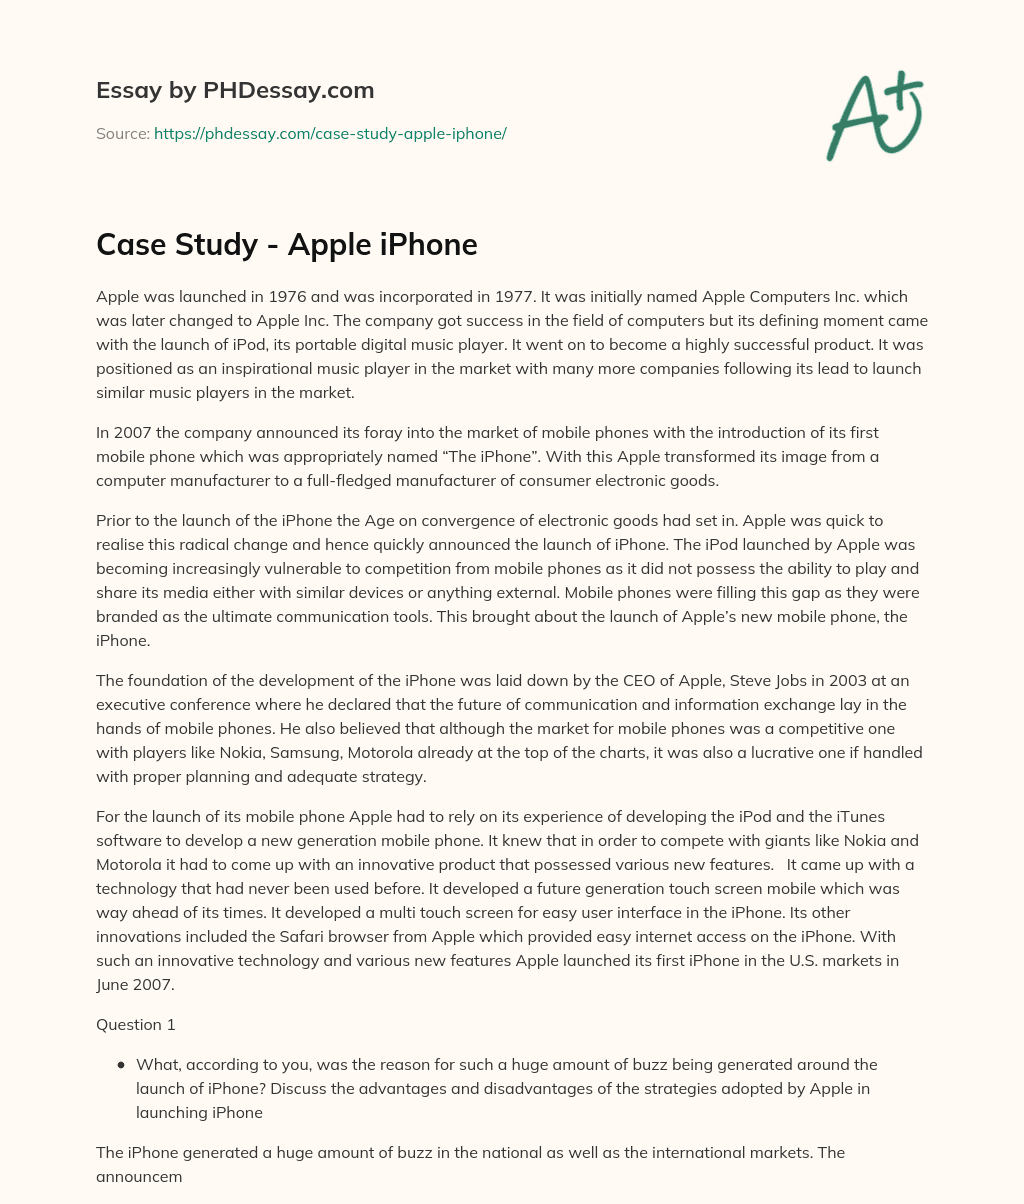 apple case study answers